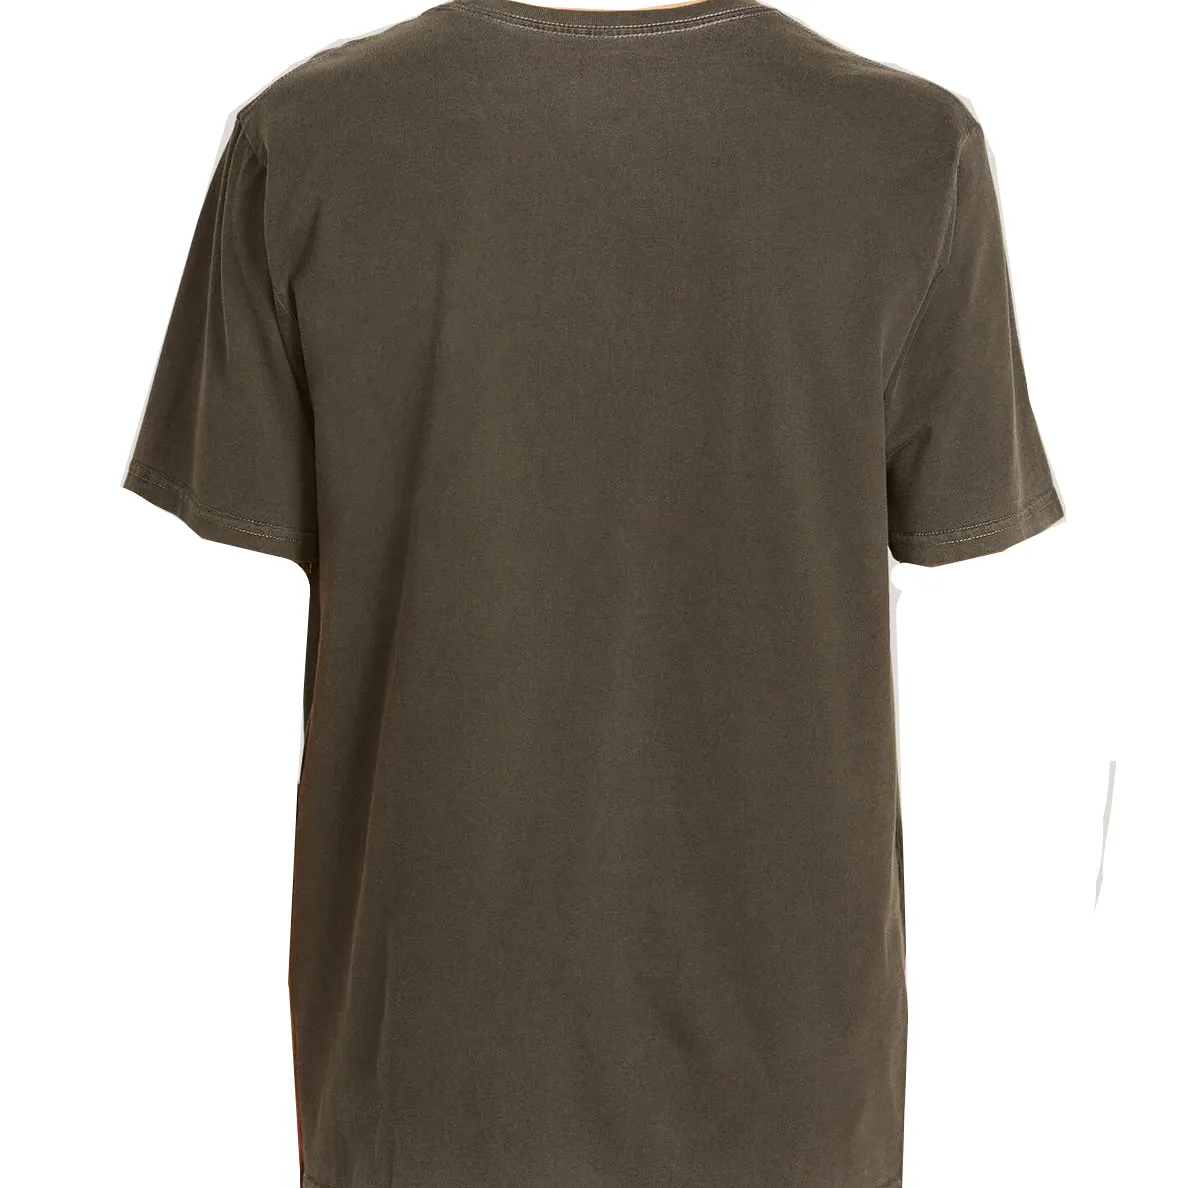 Oem Wholesale Customized Made High Quality Tee shirt organic Tshirt for men